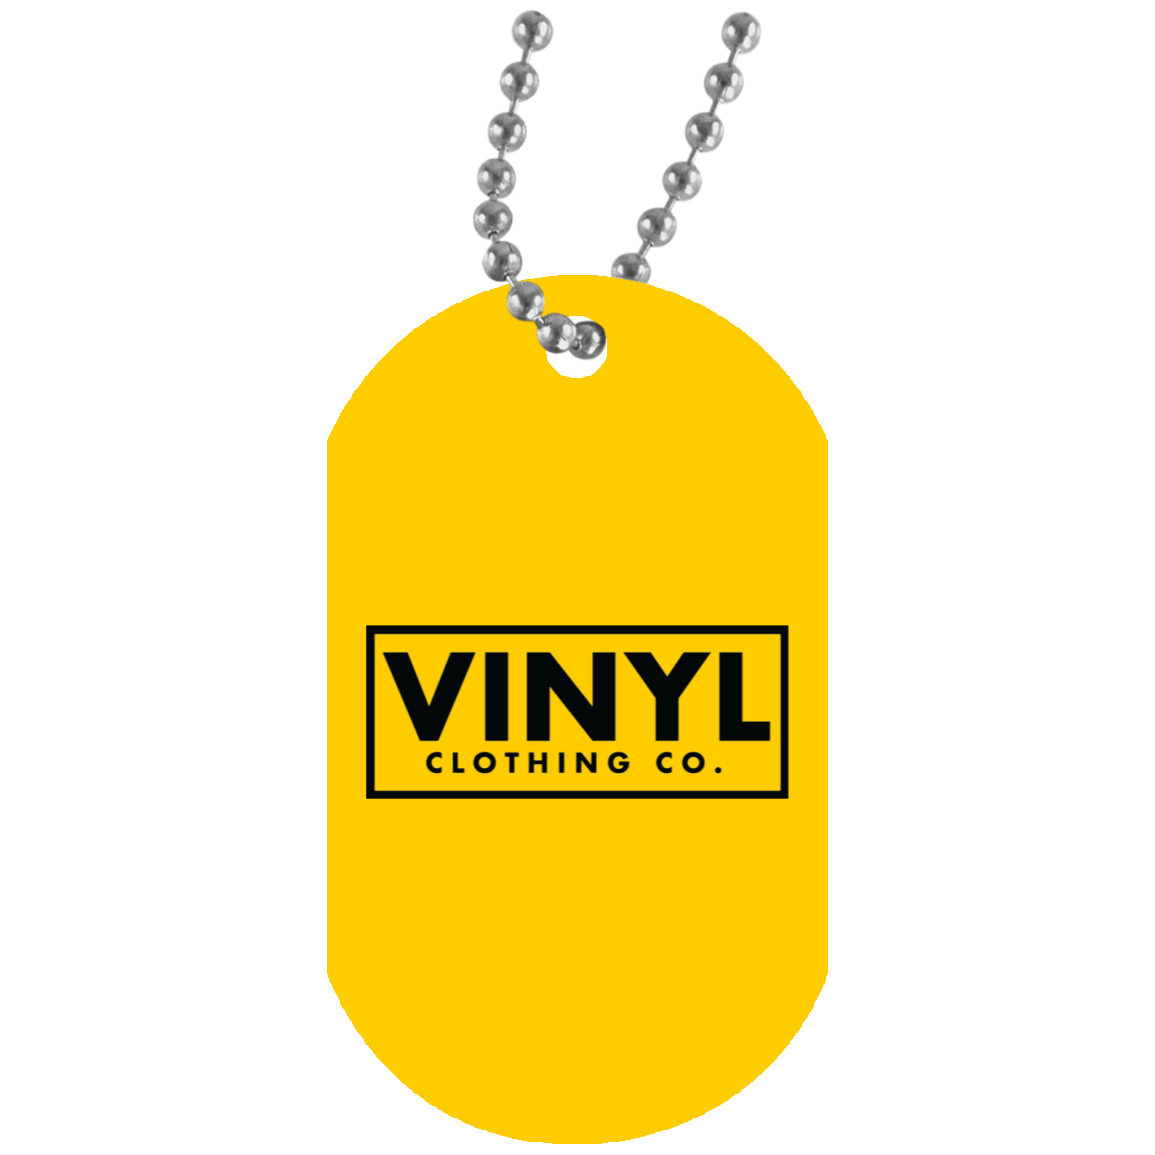 Vinyl Clothing Co. Dog Tag